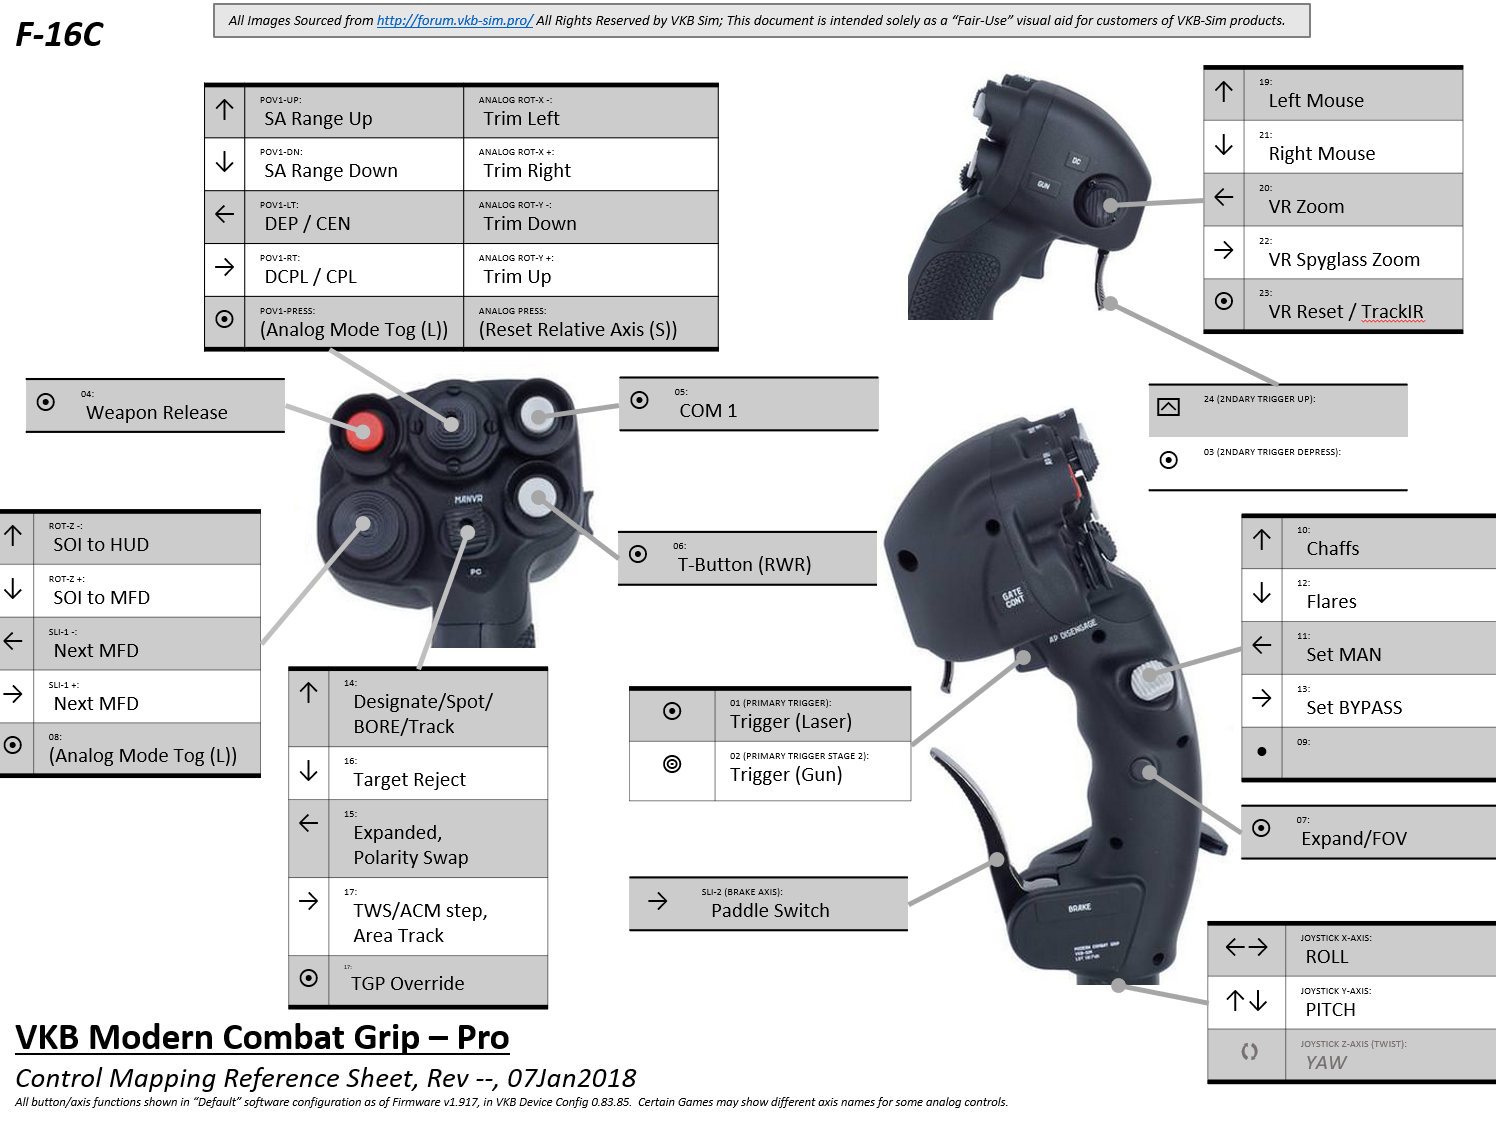 Profile VKB Modern Combat Grip Pro (MCG Pro) & Warthog Throttle for F-16C